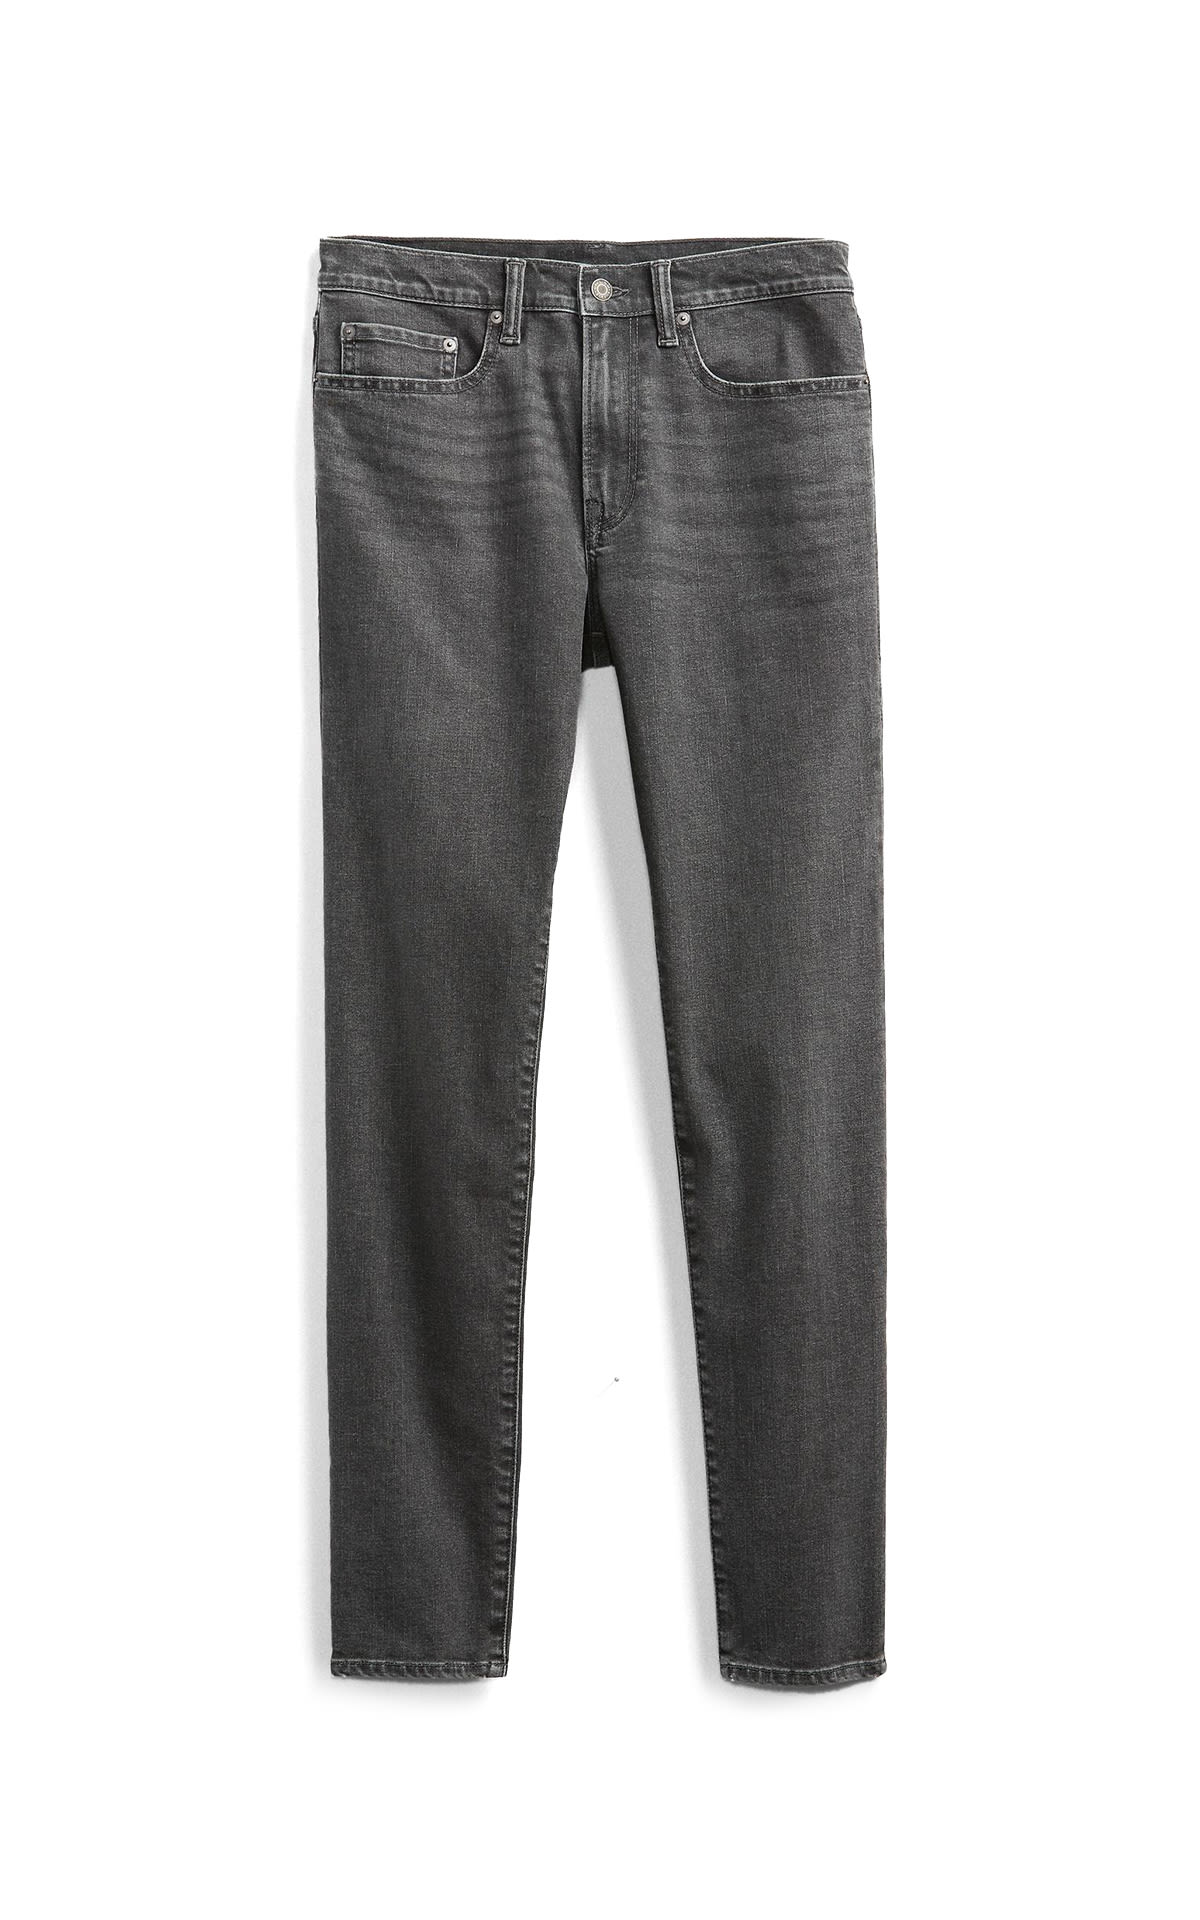 gray jeans Gap